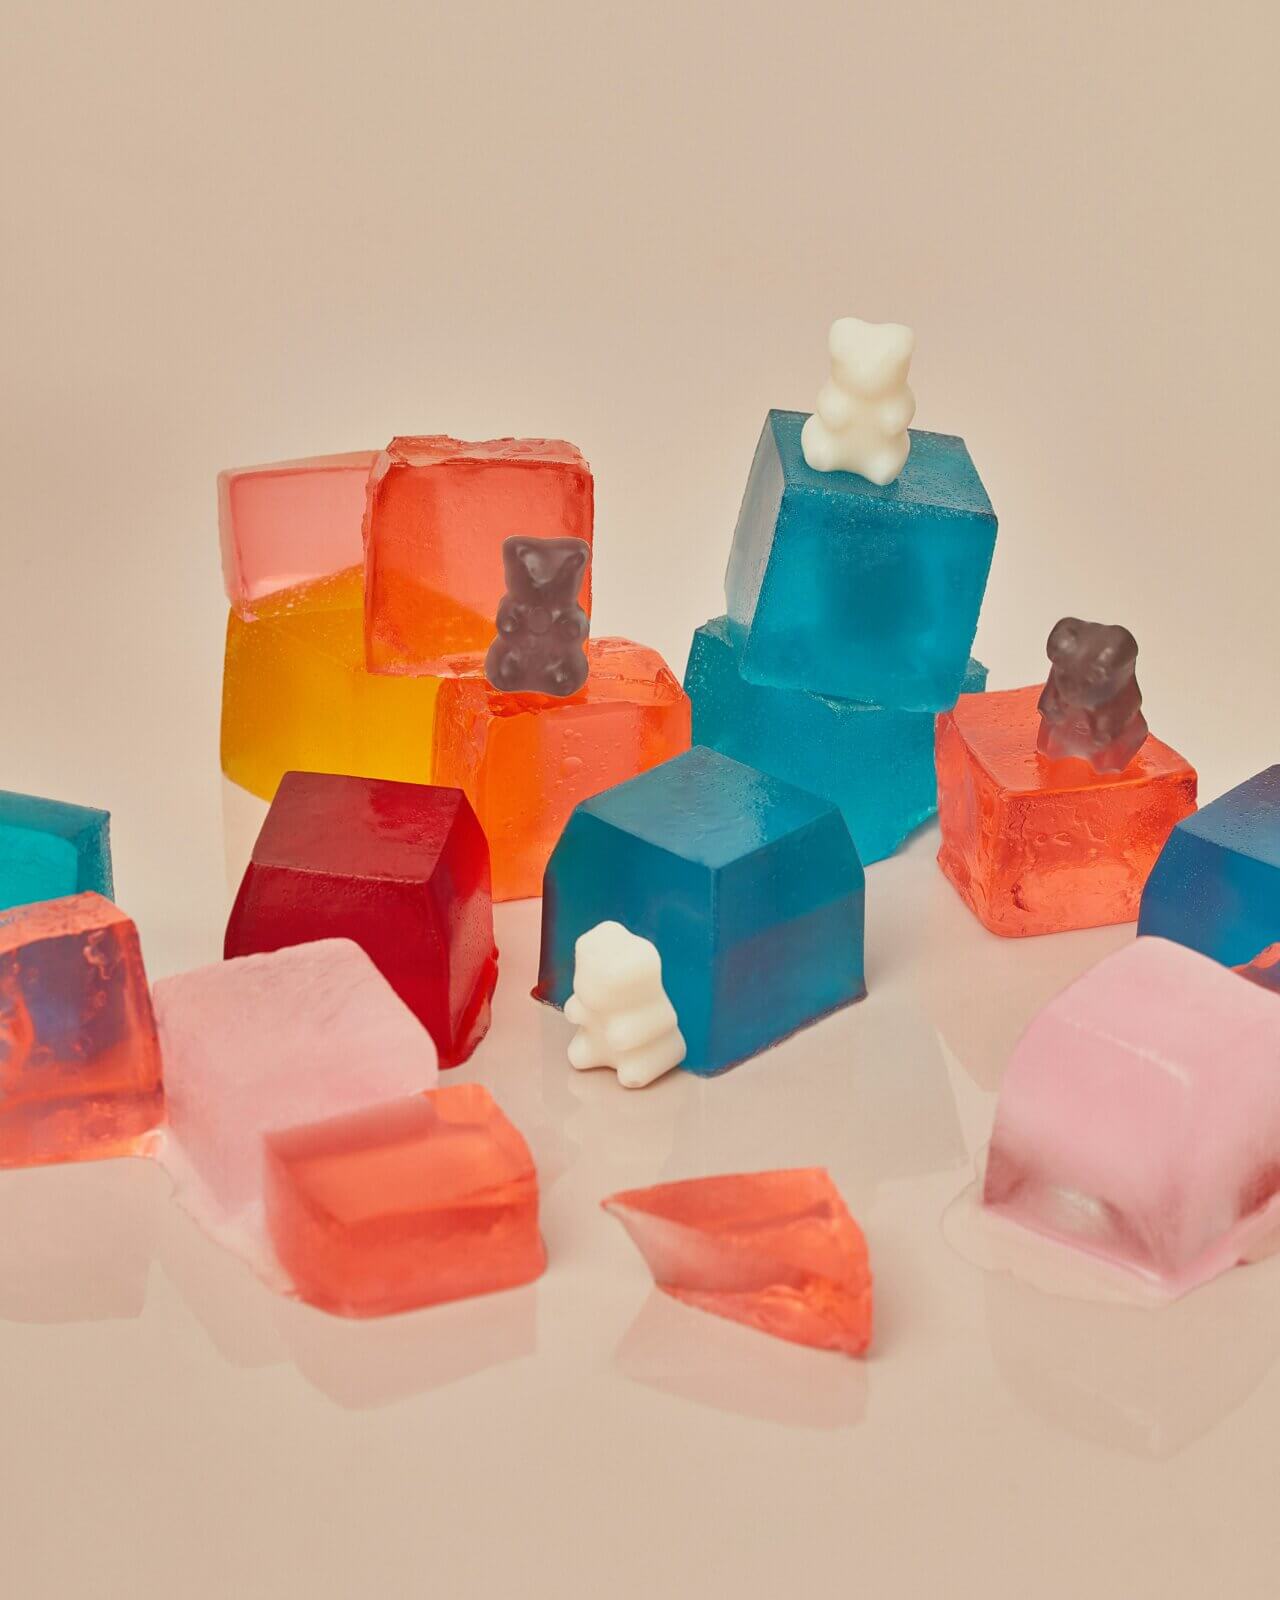 Gummies for Grown-ups: The joyful dissonance of gummy vitamins